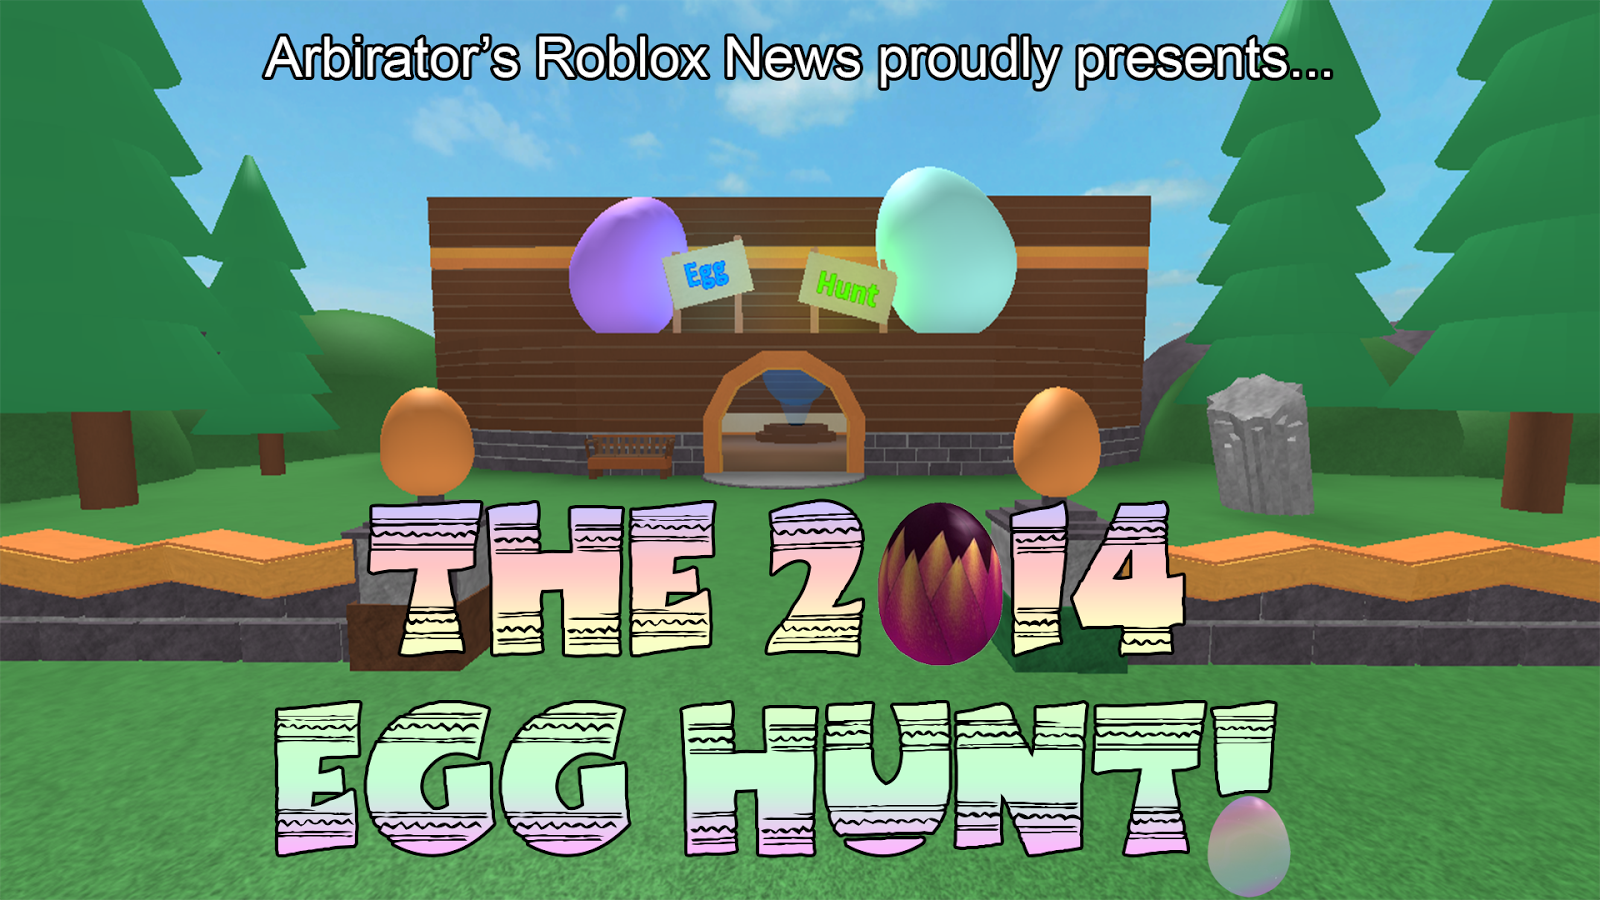 Boro Earmuffs: Roblox BeyondLand brings Easter eggs hunt, here's